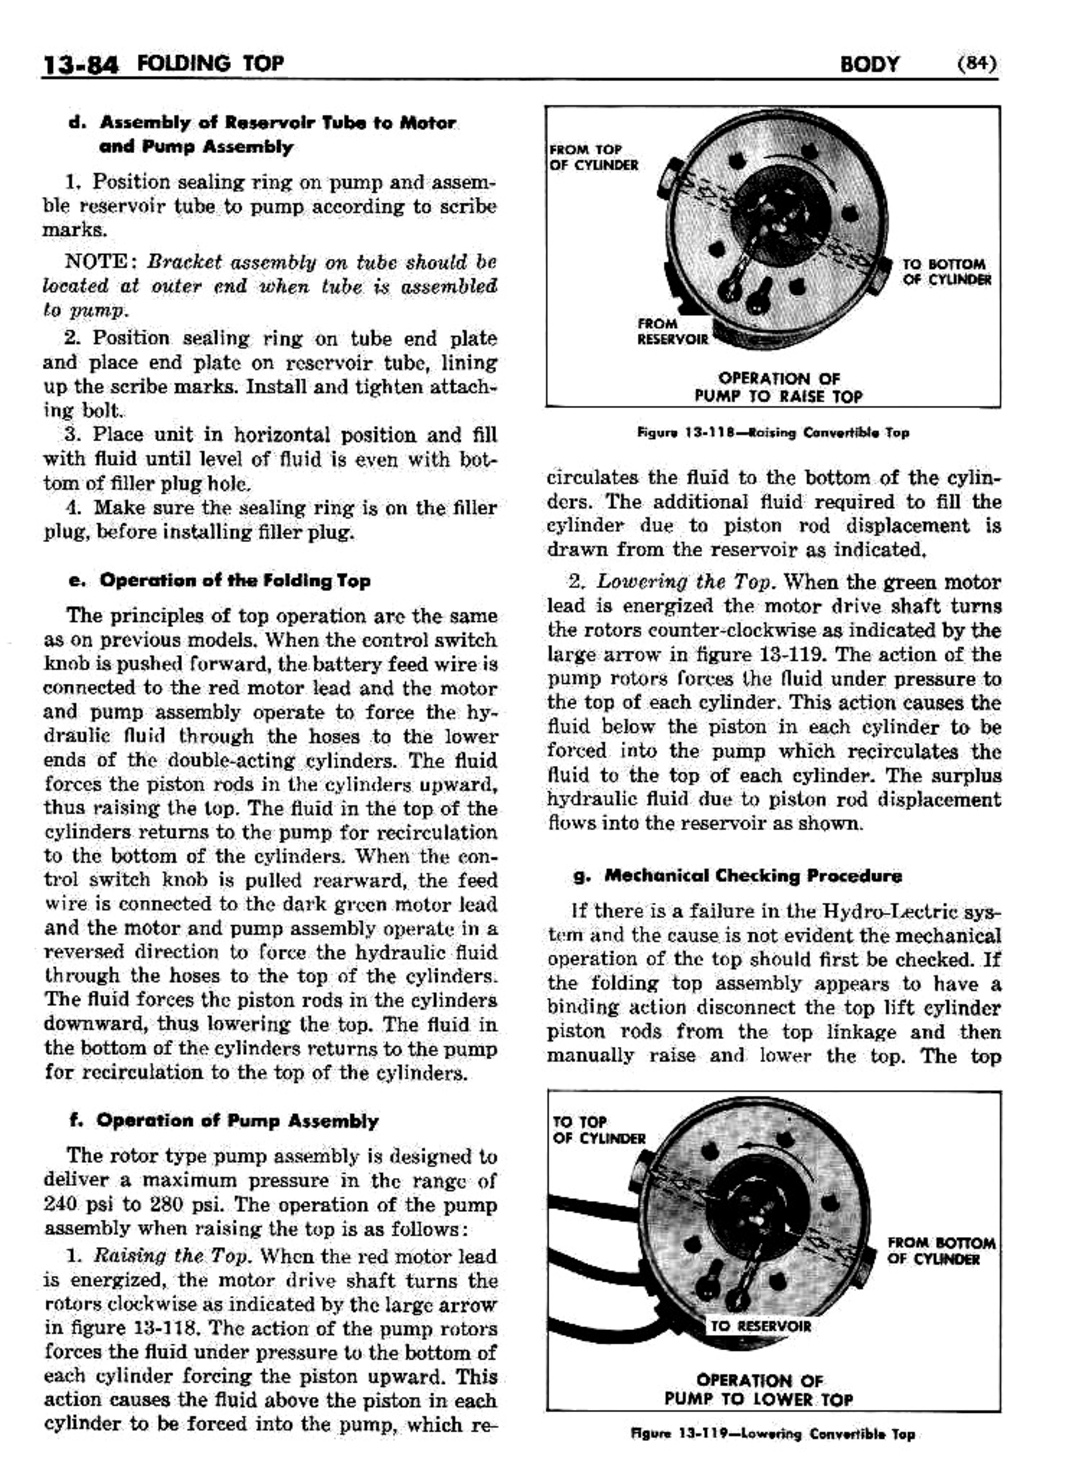 n_1958 Buick Body Service Manual-085-085.jpg